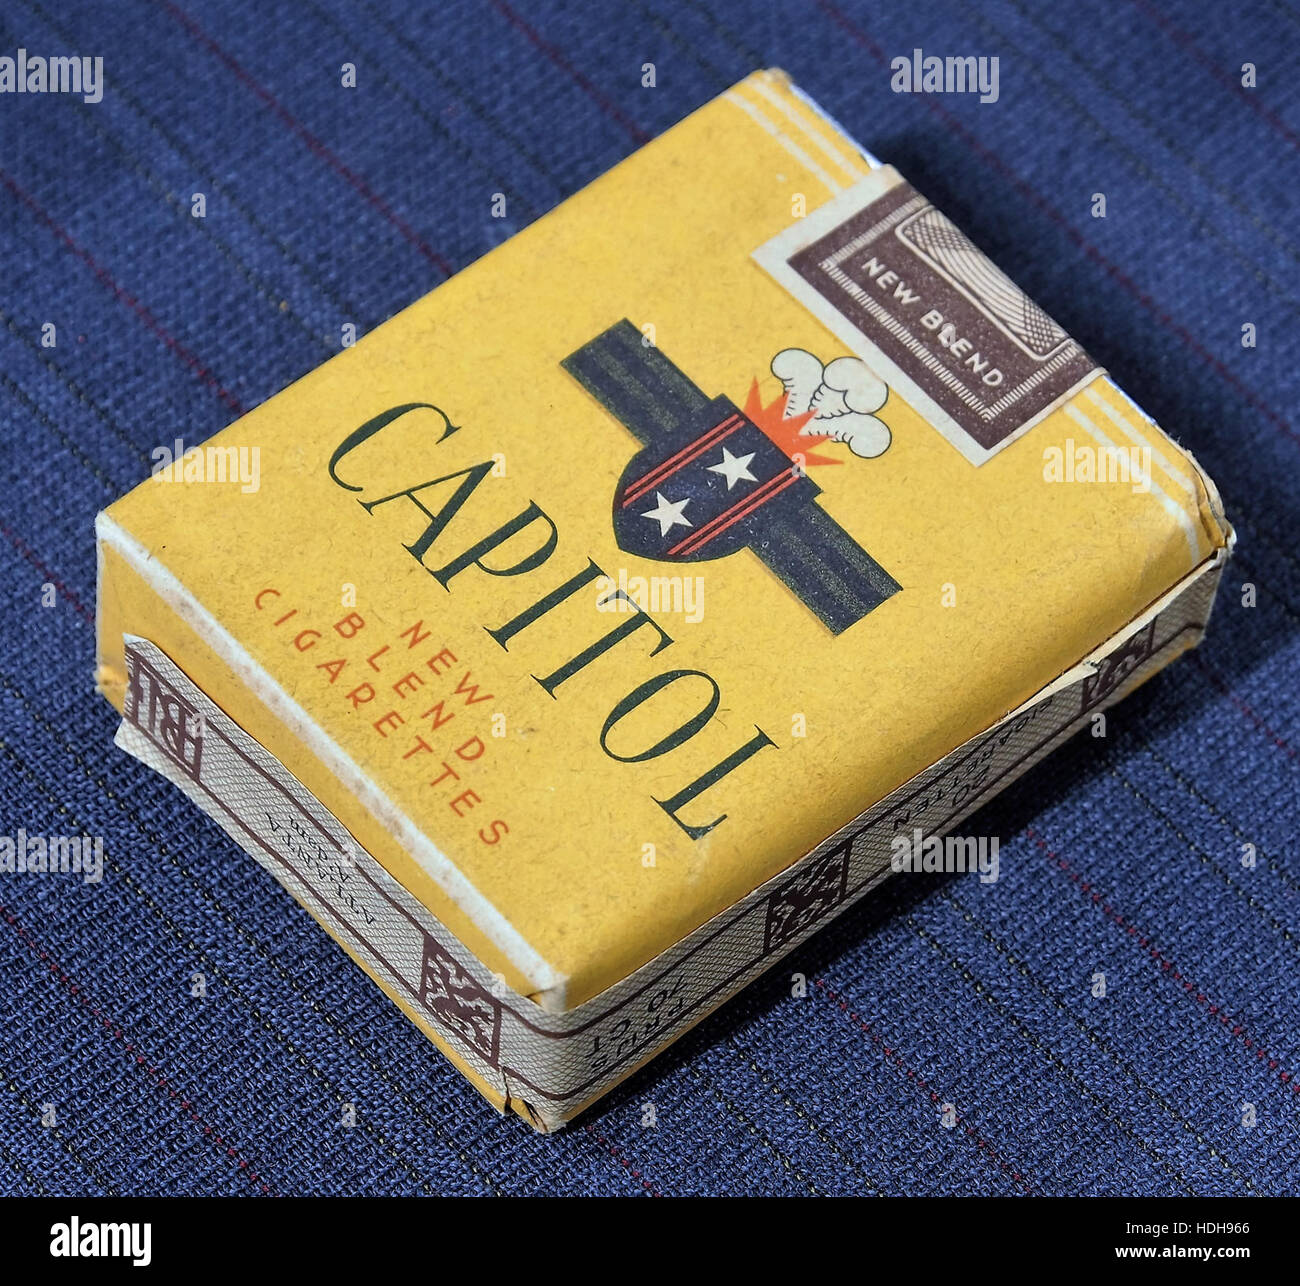 Capitol Zigaretten pack pic1 Stockfoto